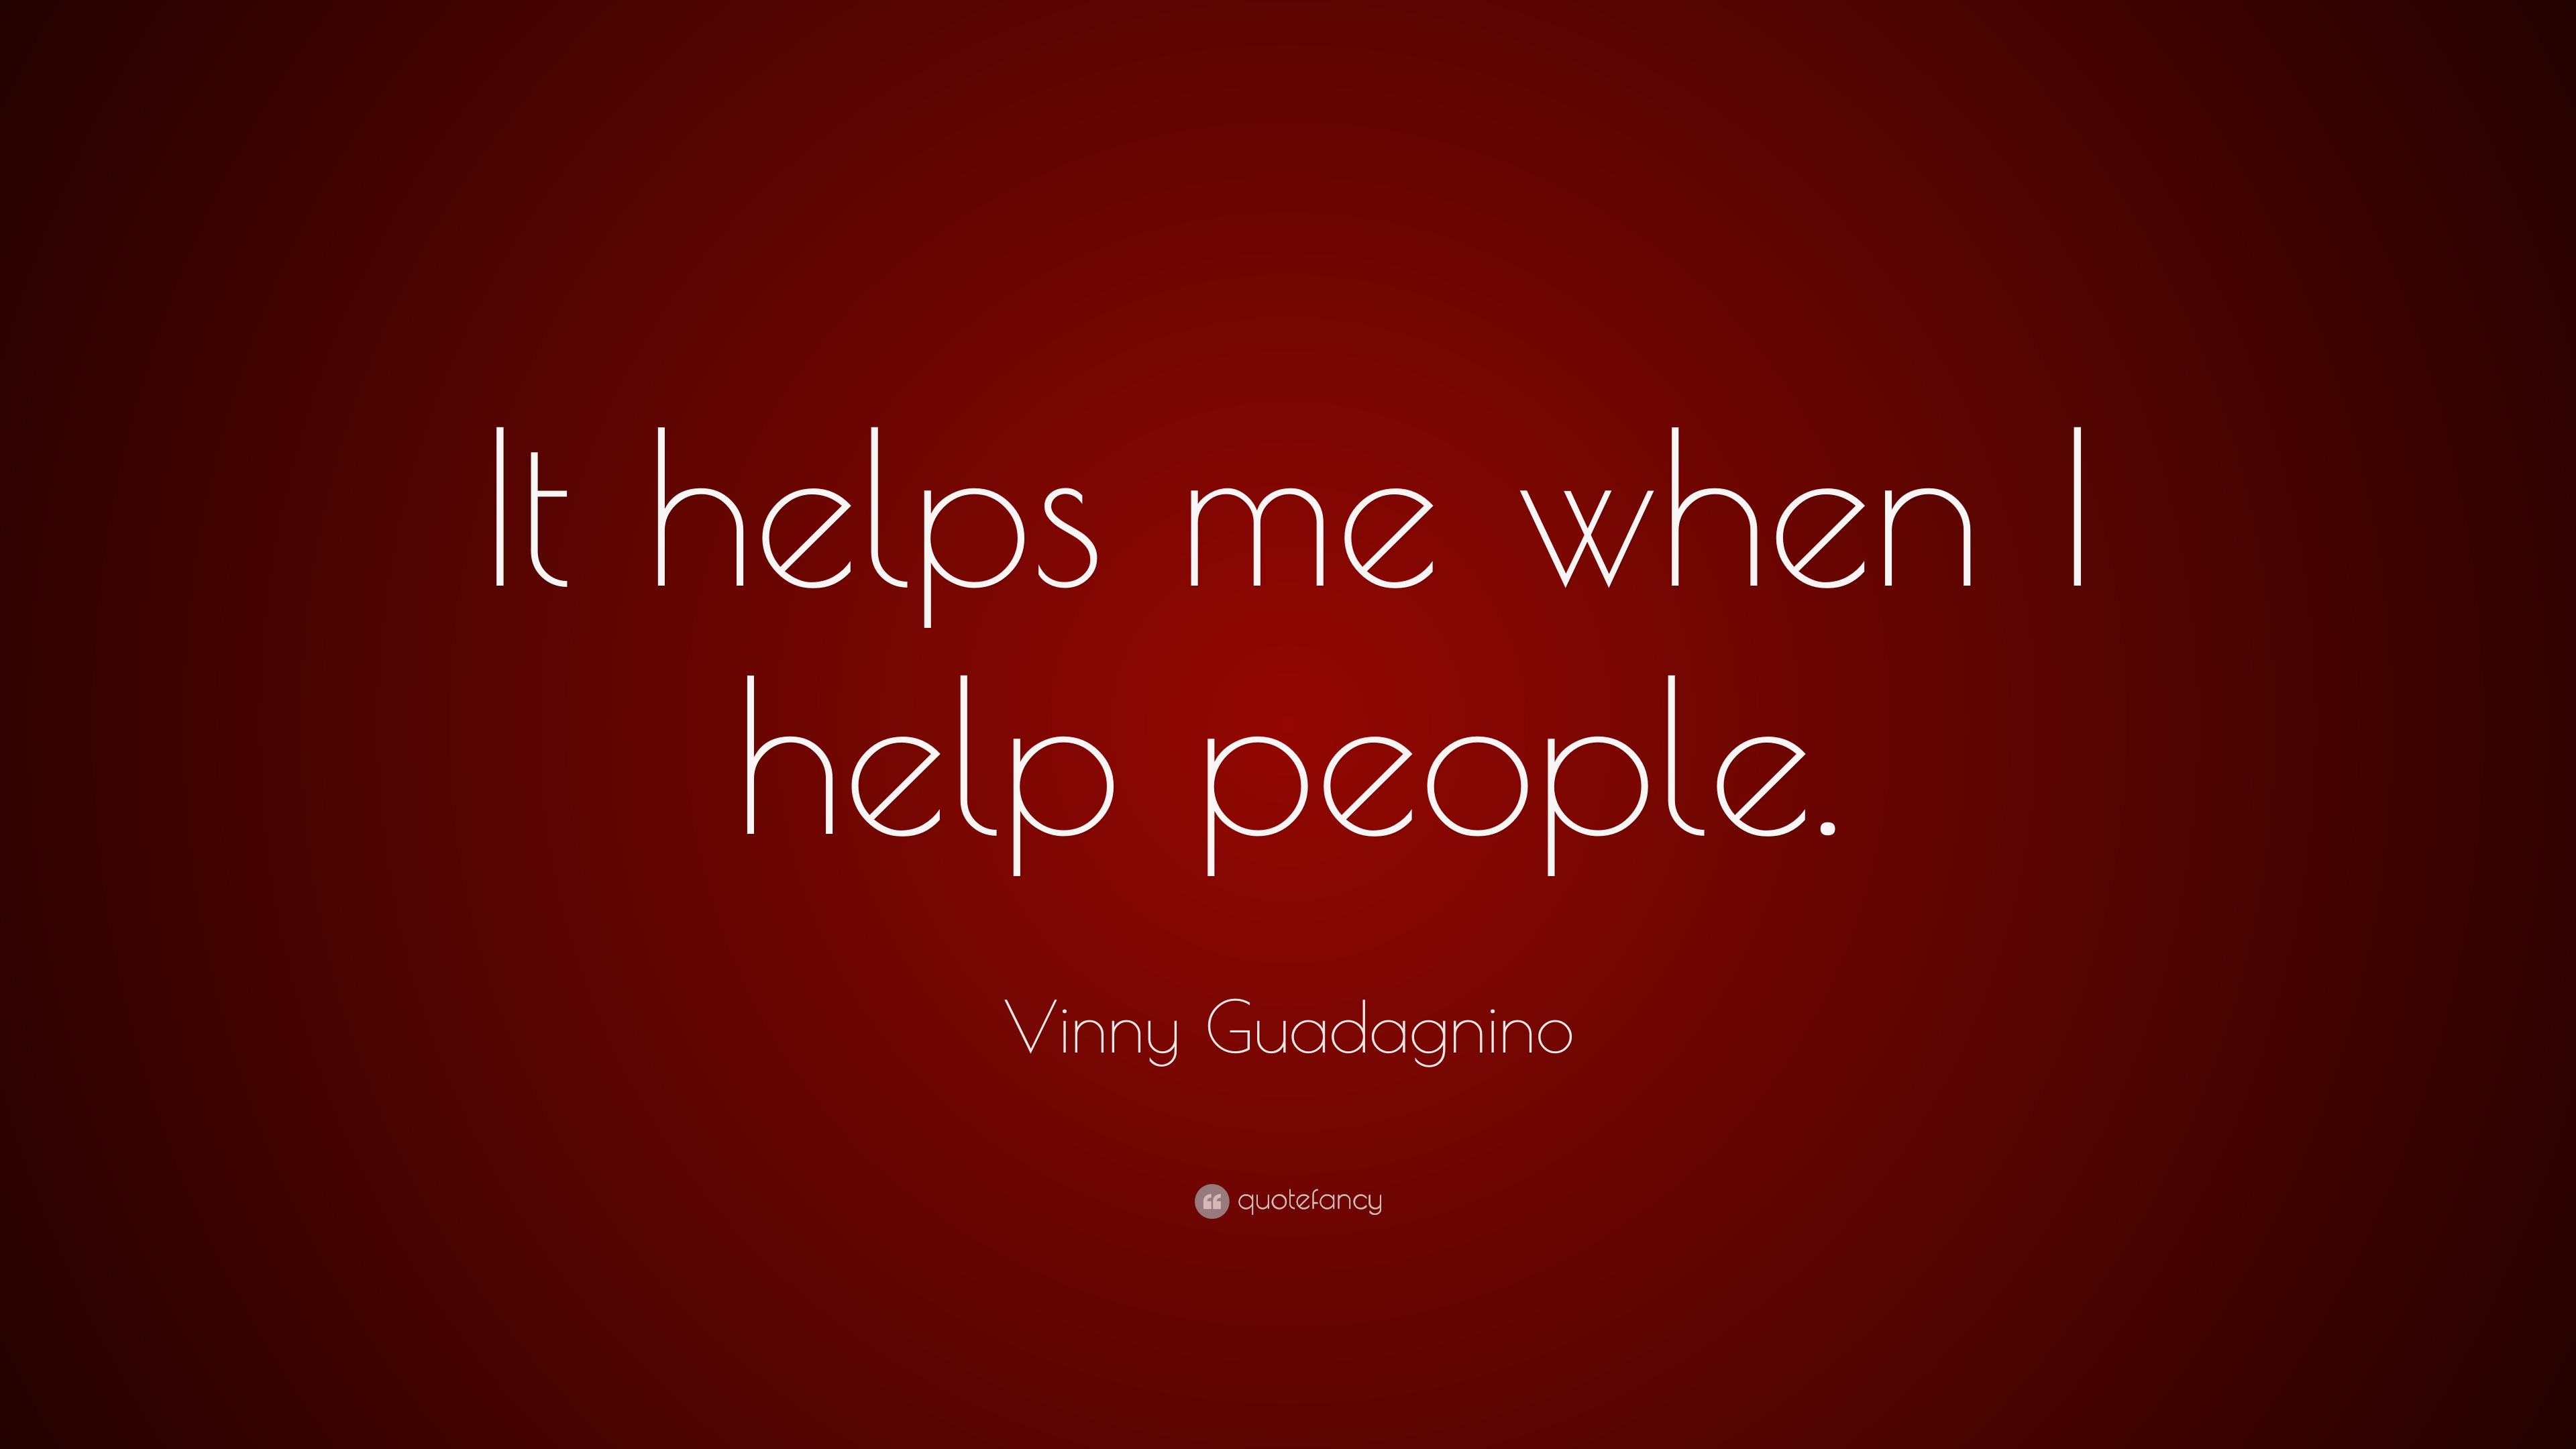 Vinny Guadagnino Quote: “It helps me